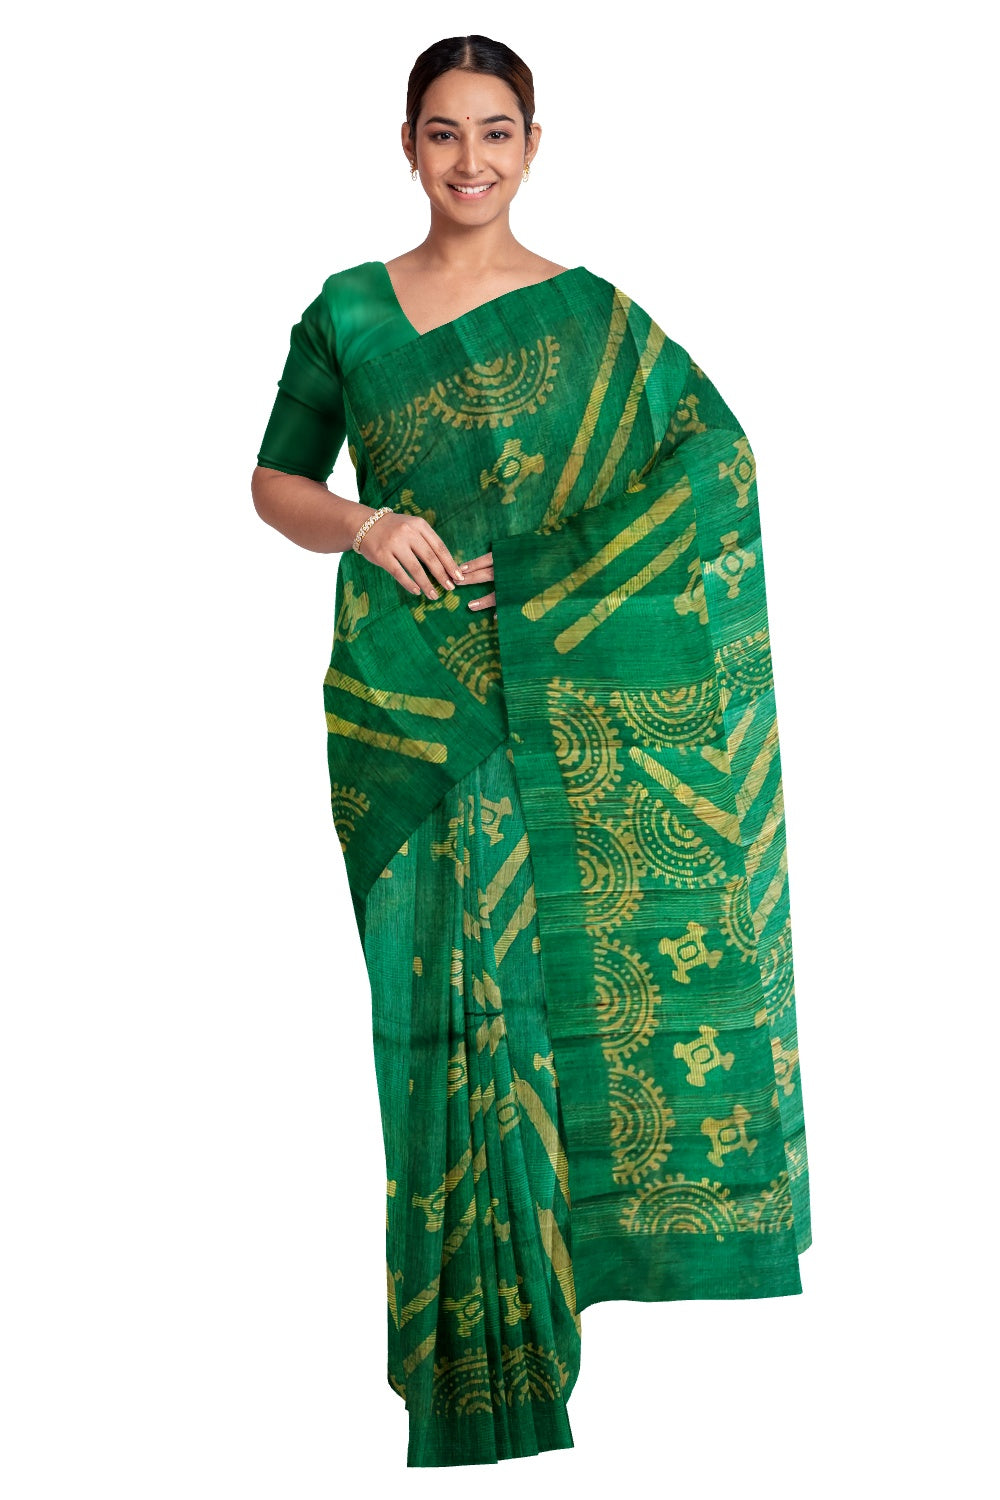 Southloom Cotton Designer Green Saree with Baswara Print